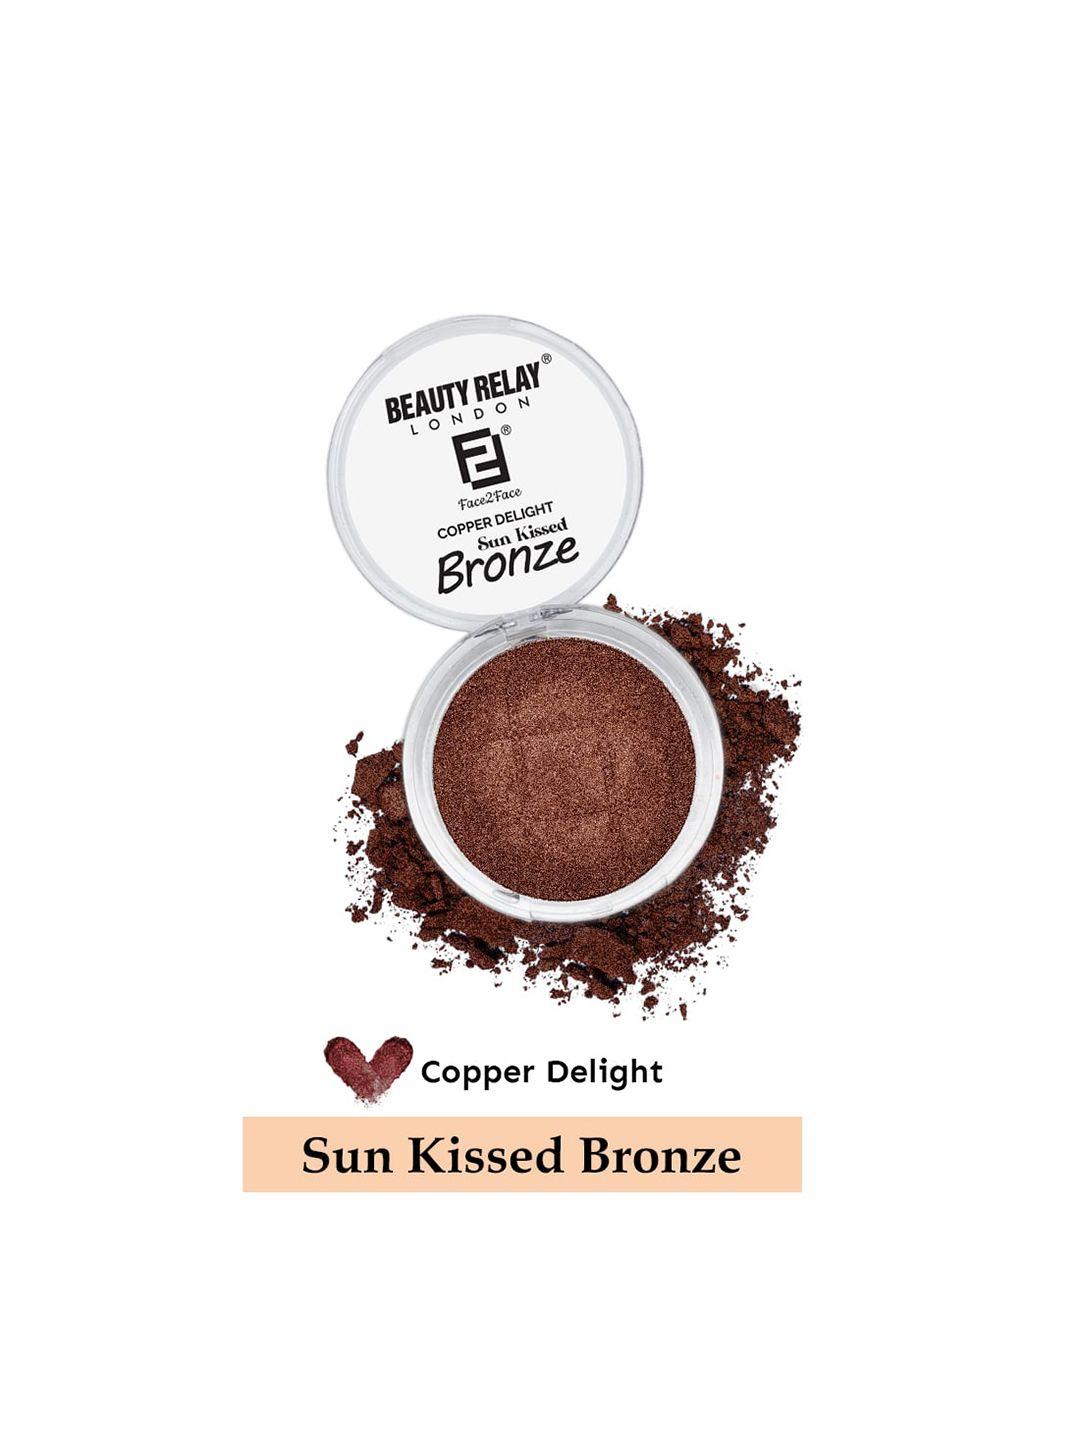 beautyrelay london sun kissed bronze palette instant bronzed glow - copper delight 12 g